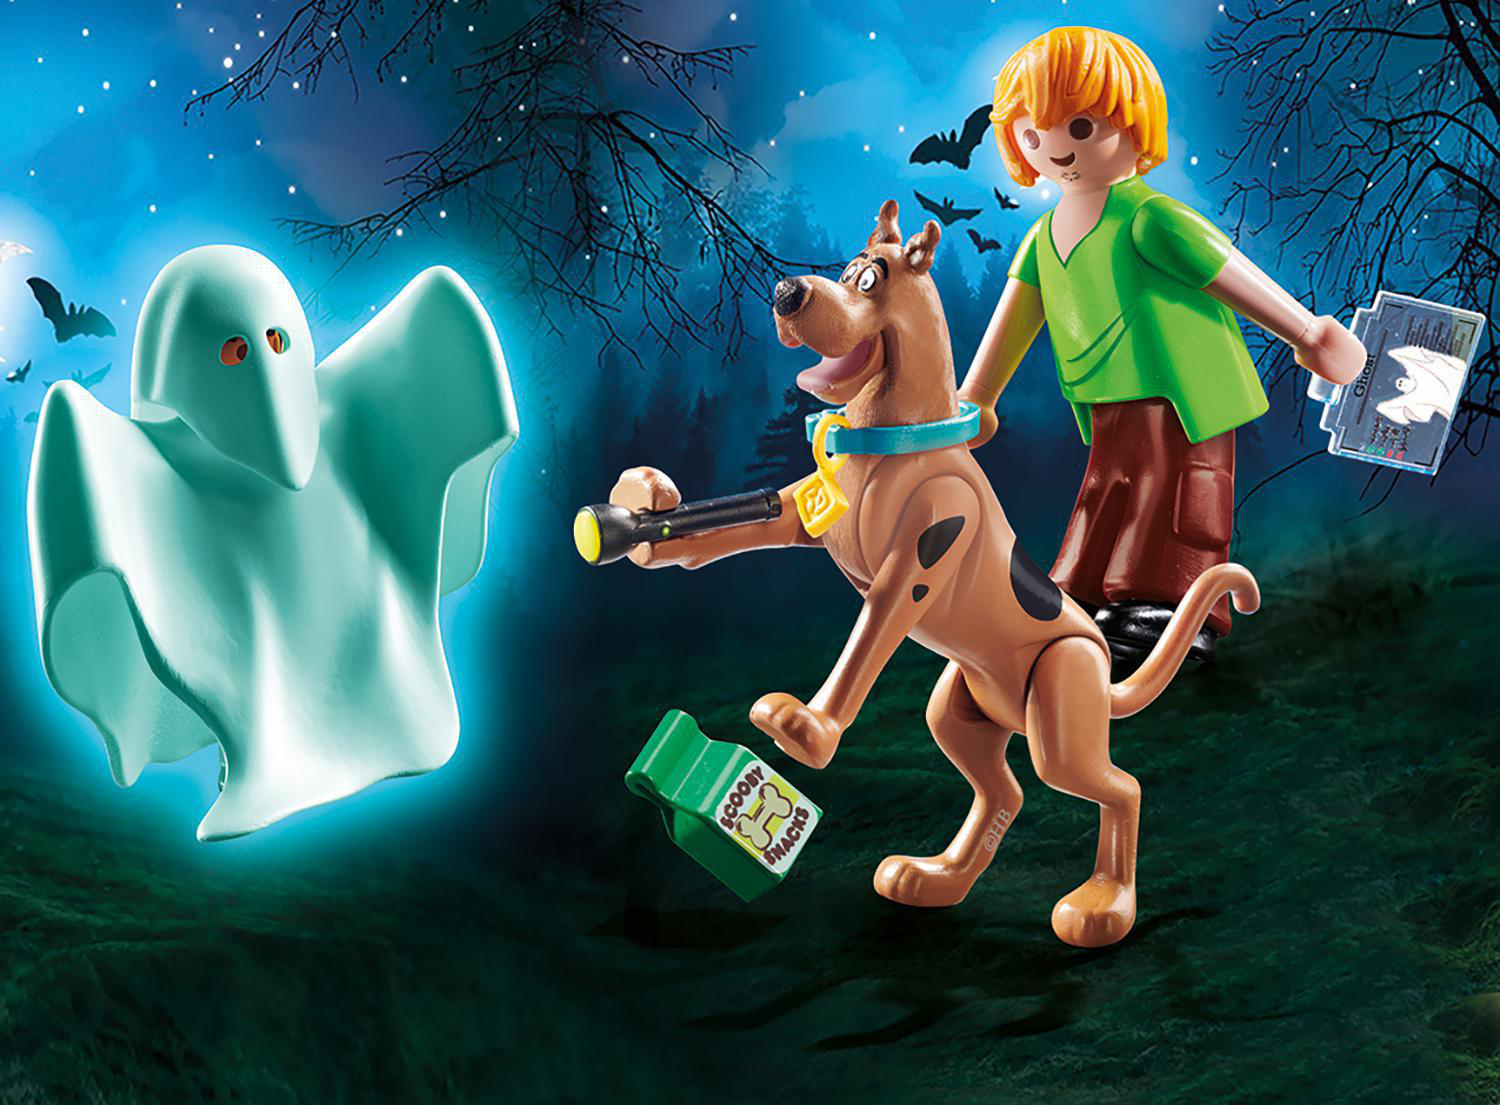 PLAYMOBIL 70287 SCOOBY-DOO! Geist Shaggy Scooby mit Mehrfarbig Spielset, 